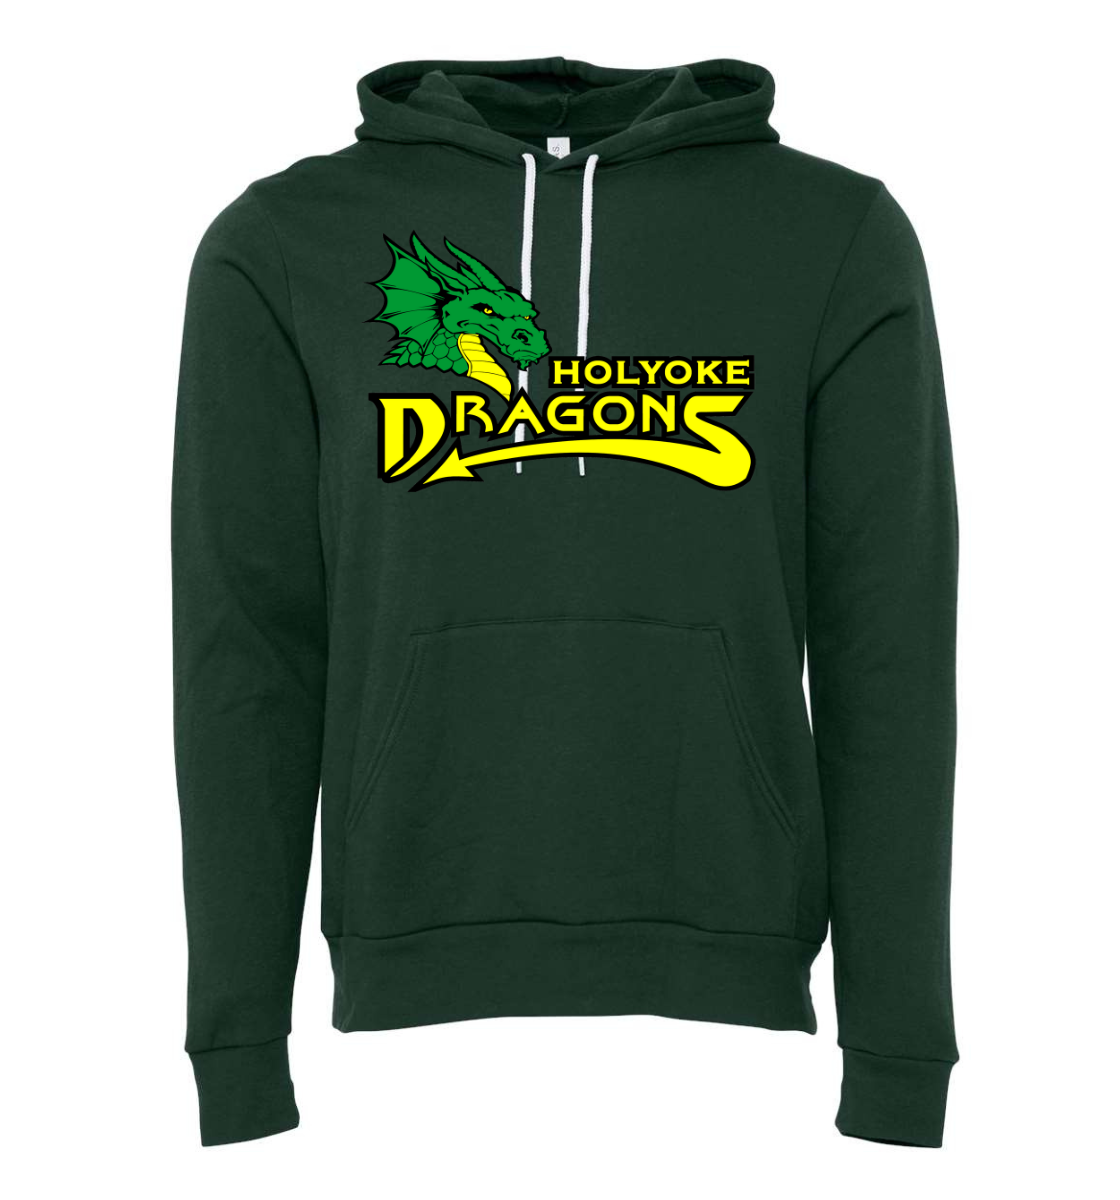 holyoke dragons hoodie - unisex - elevate your spirit!